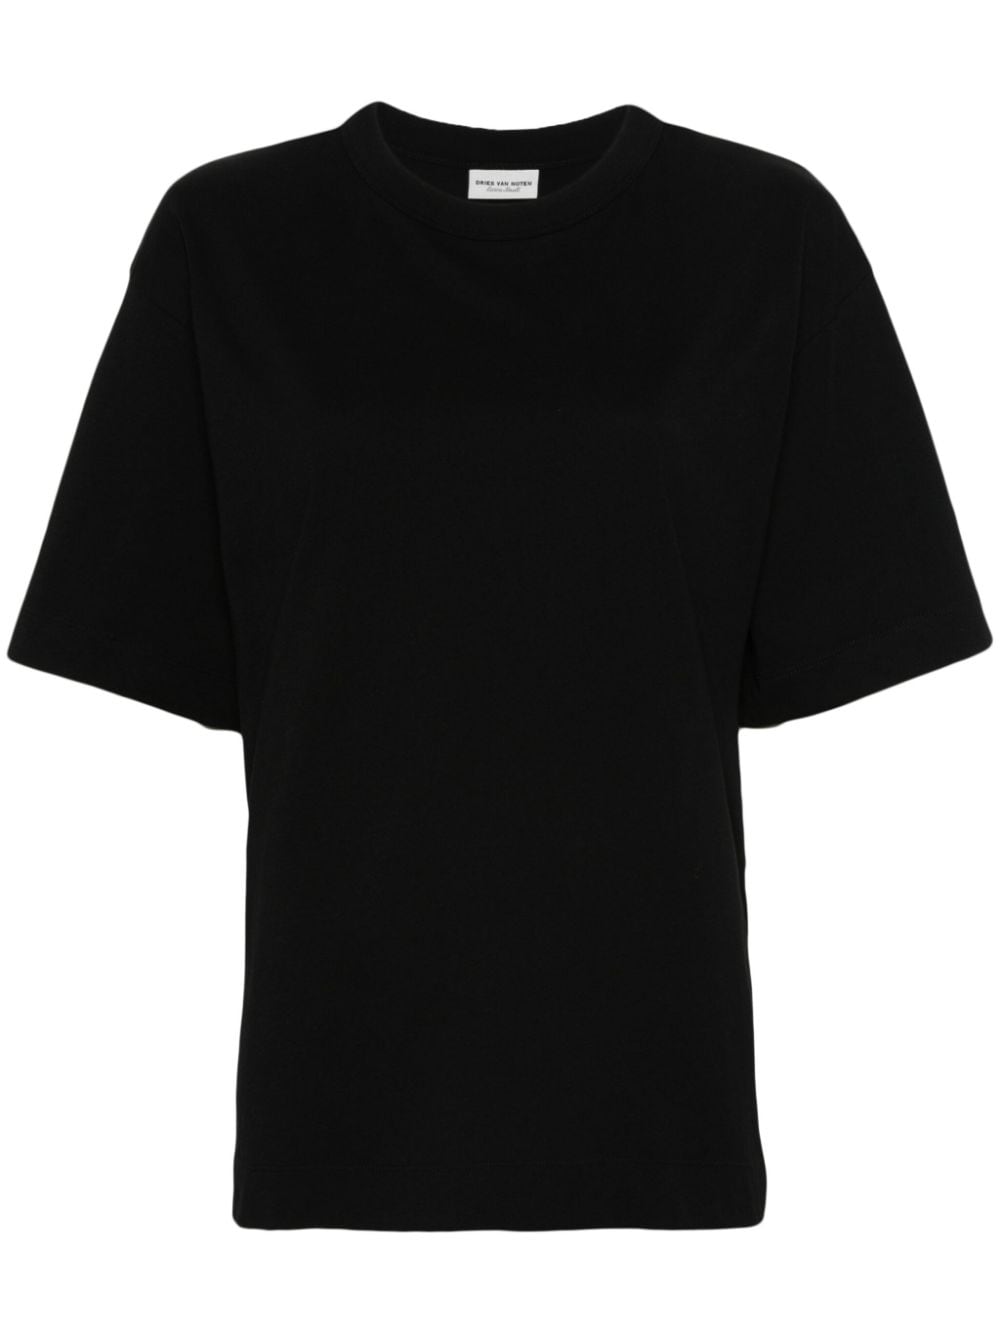 Tontal black t-shirt